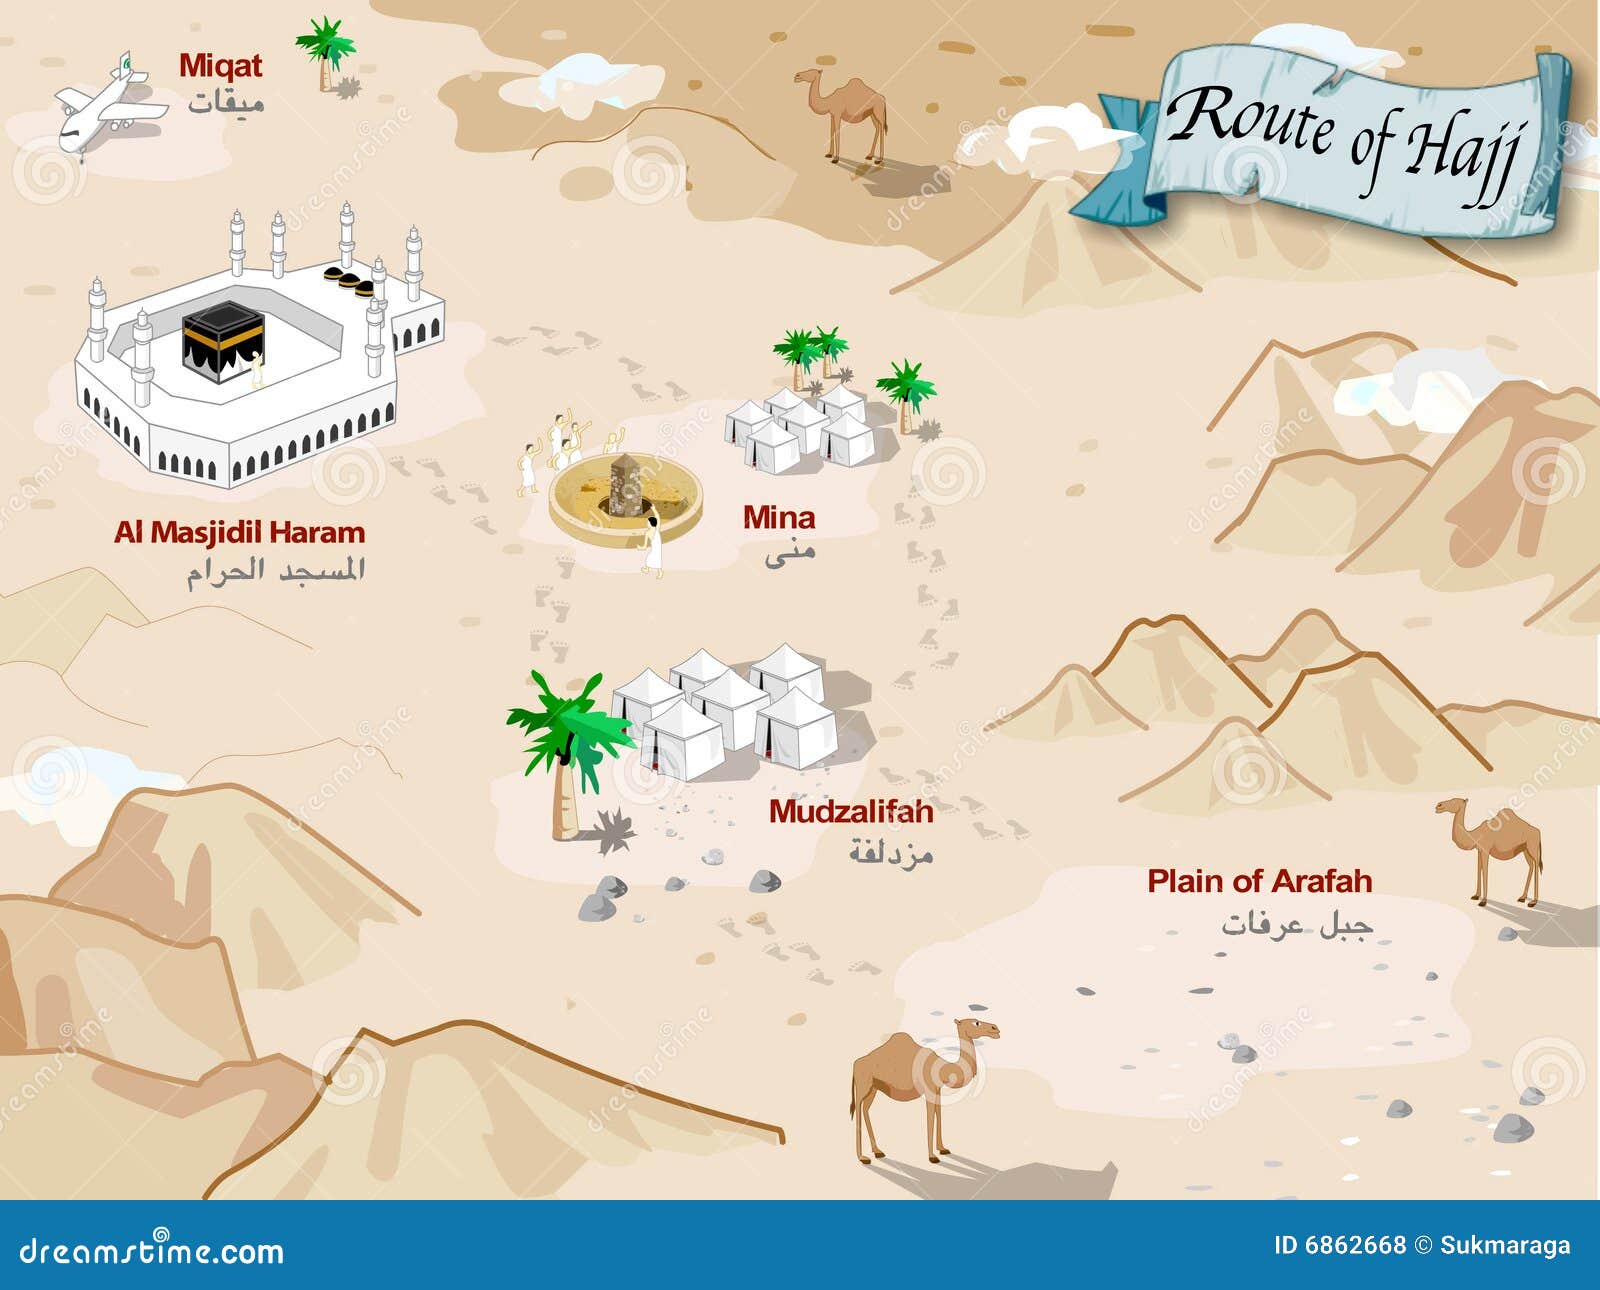 route of hajj